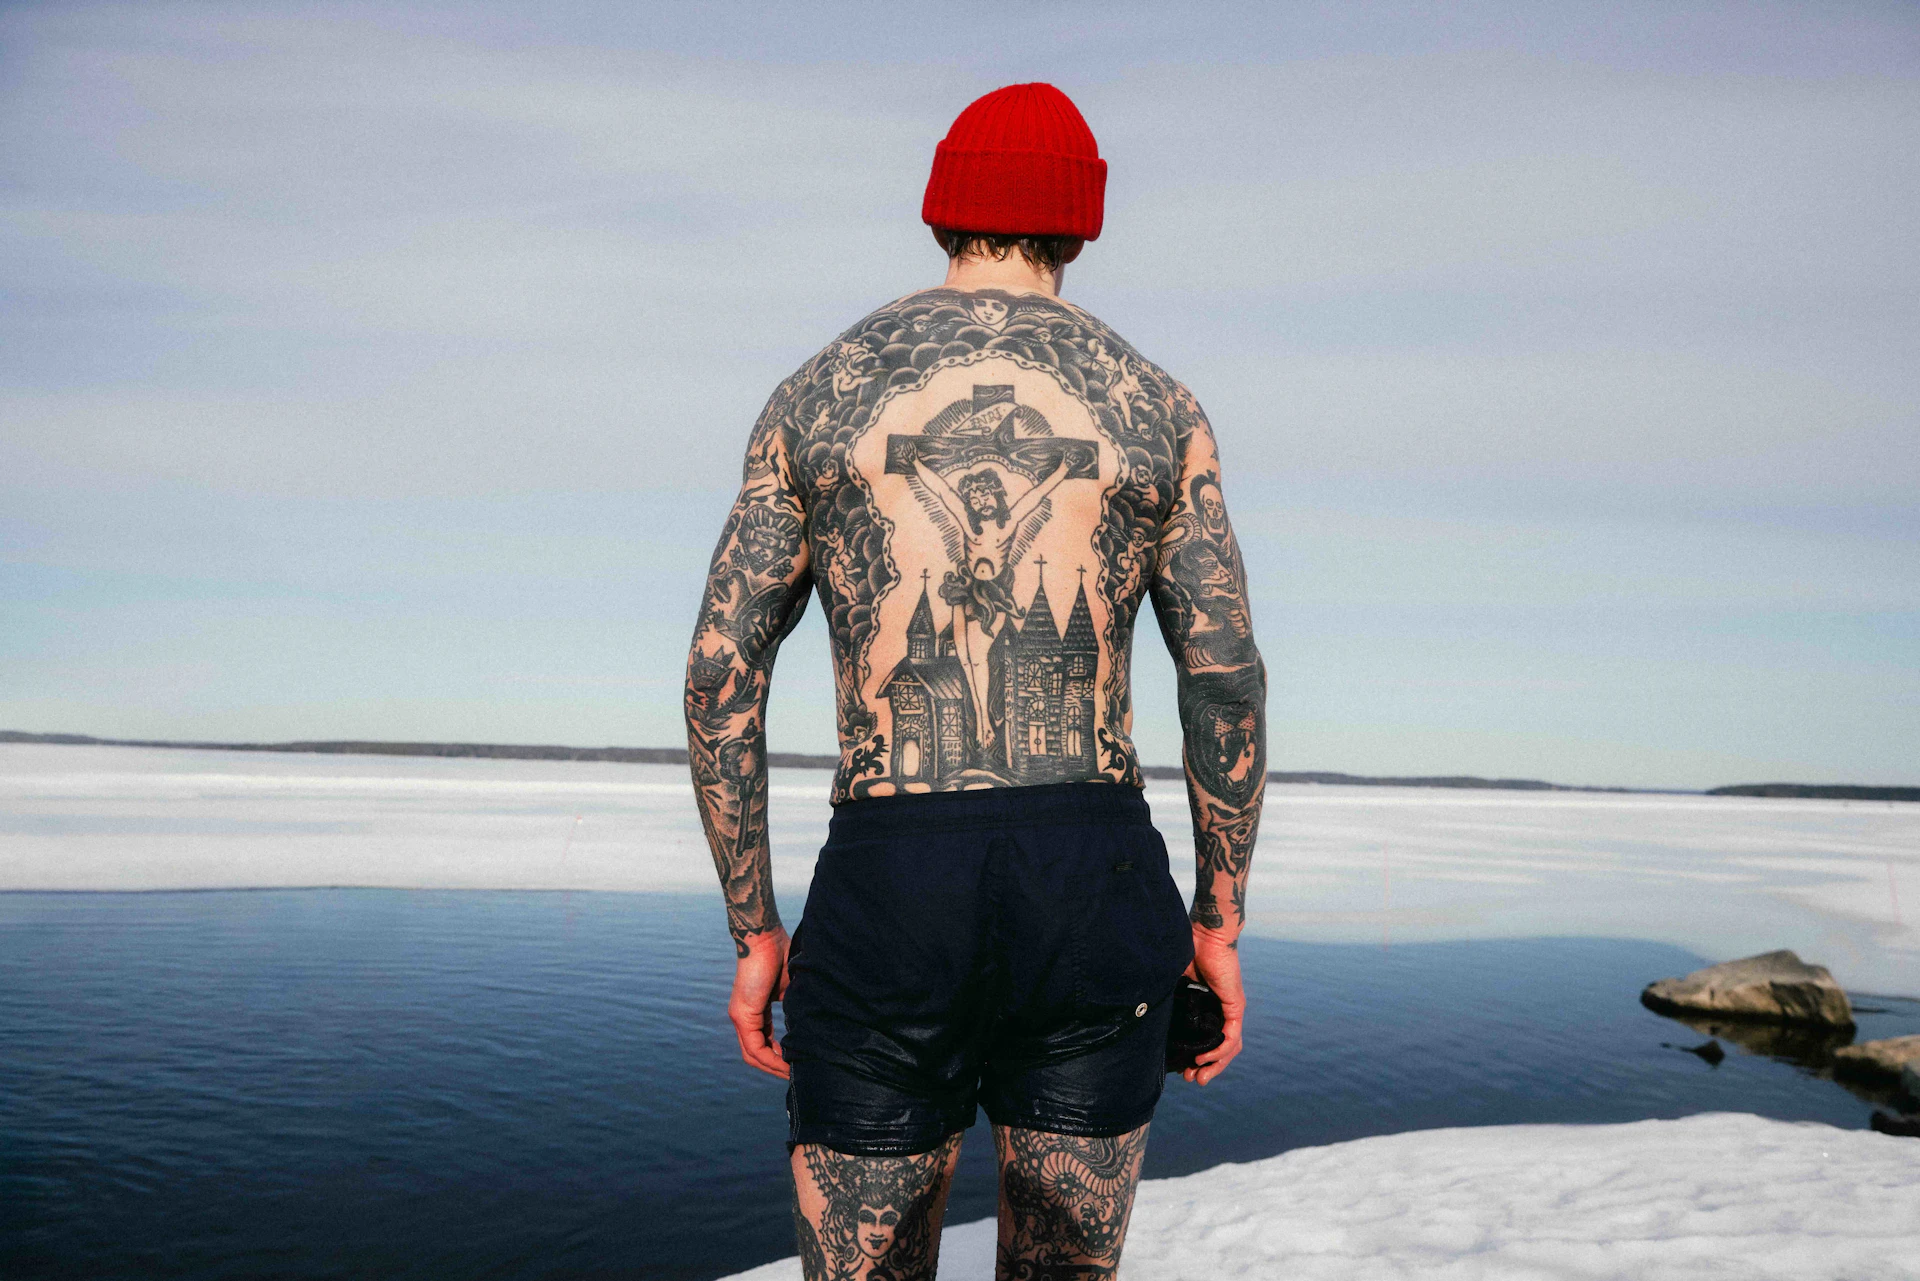 In Photos: Finland’s folk ice swimming fanatics